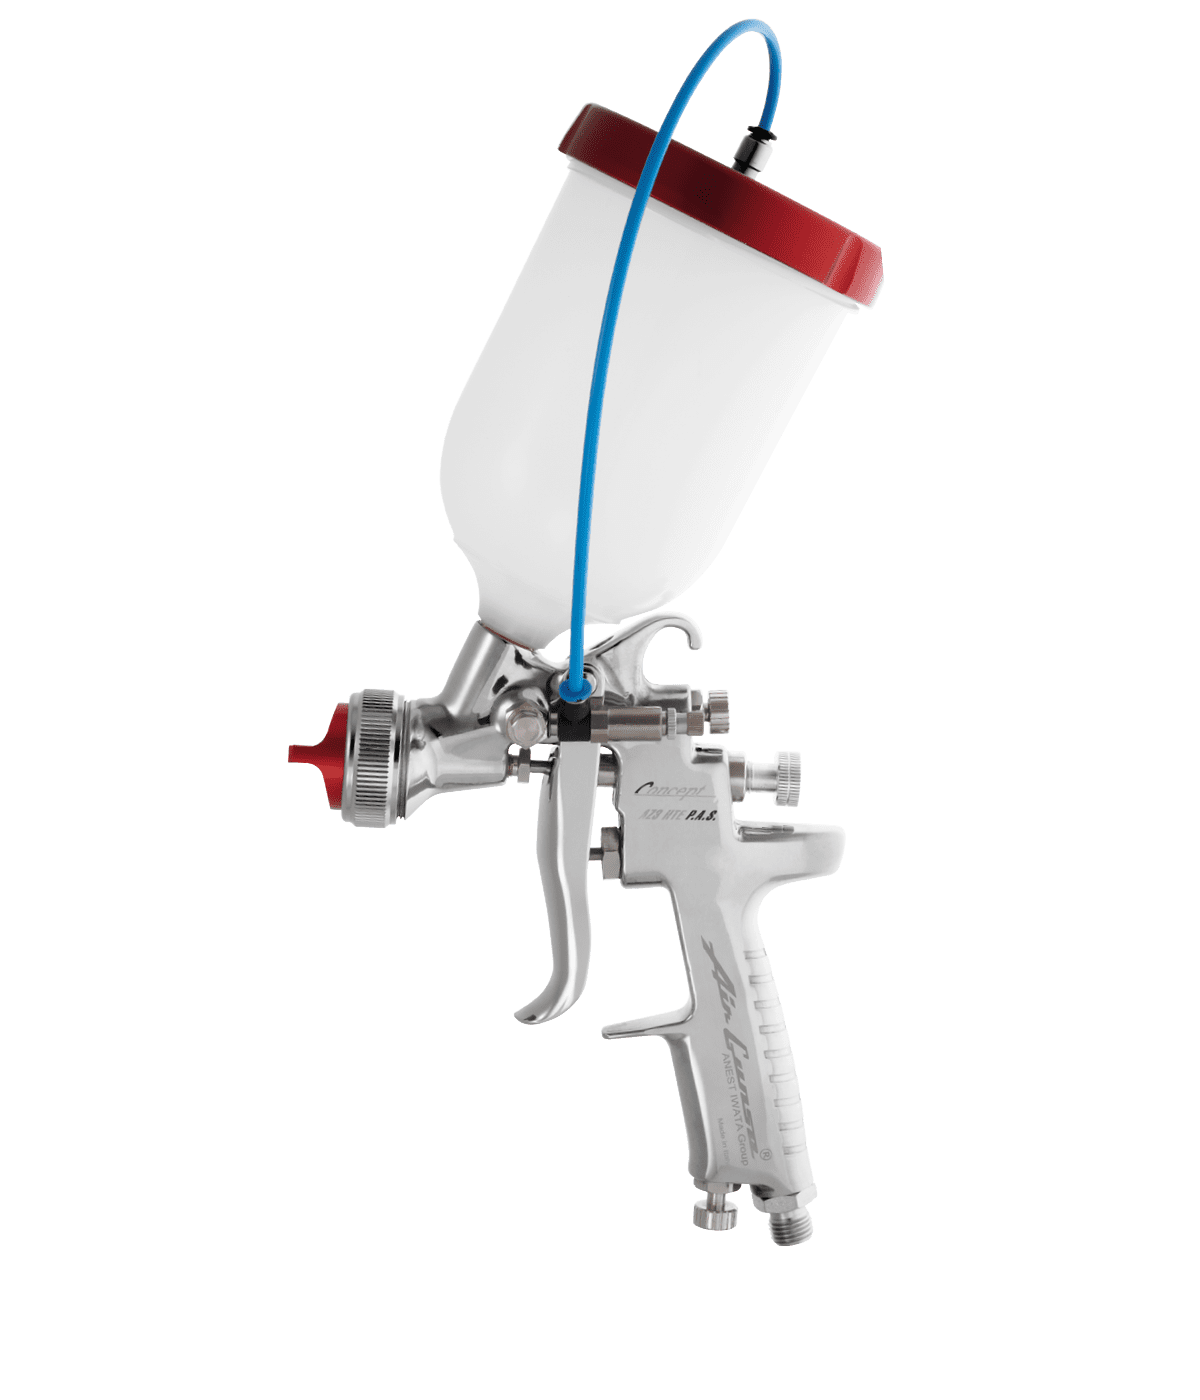 ANEST IWATA launches new Spray guns kits - Wood & Panel USA